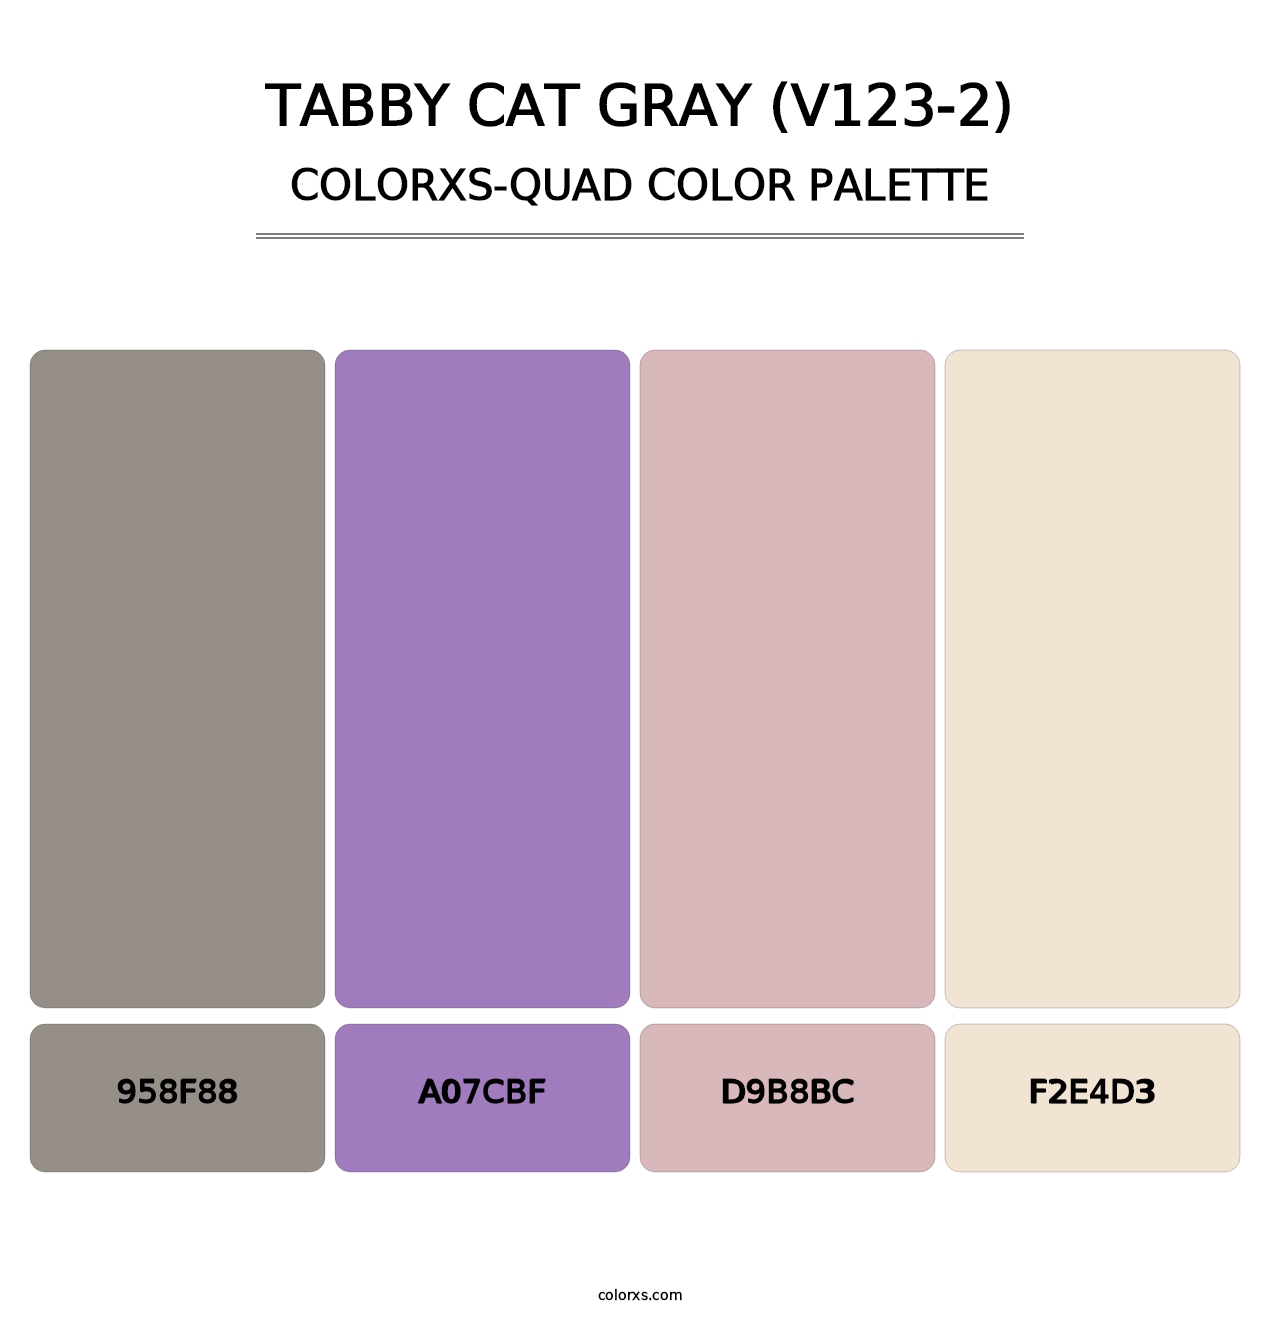 Tabby Cat Gray (V123-2) - Colorxs Quad Palette